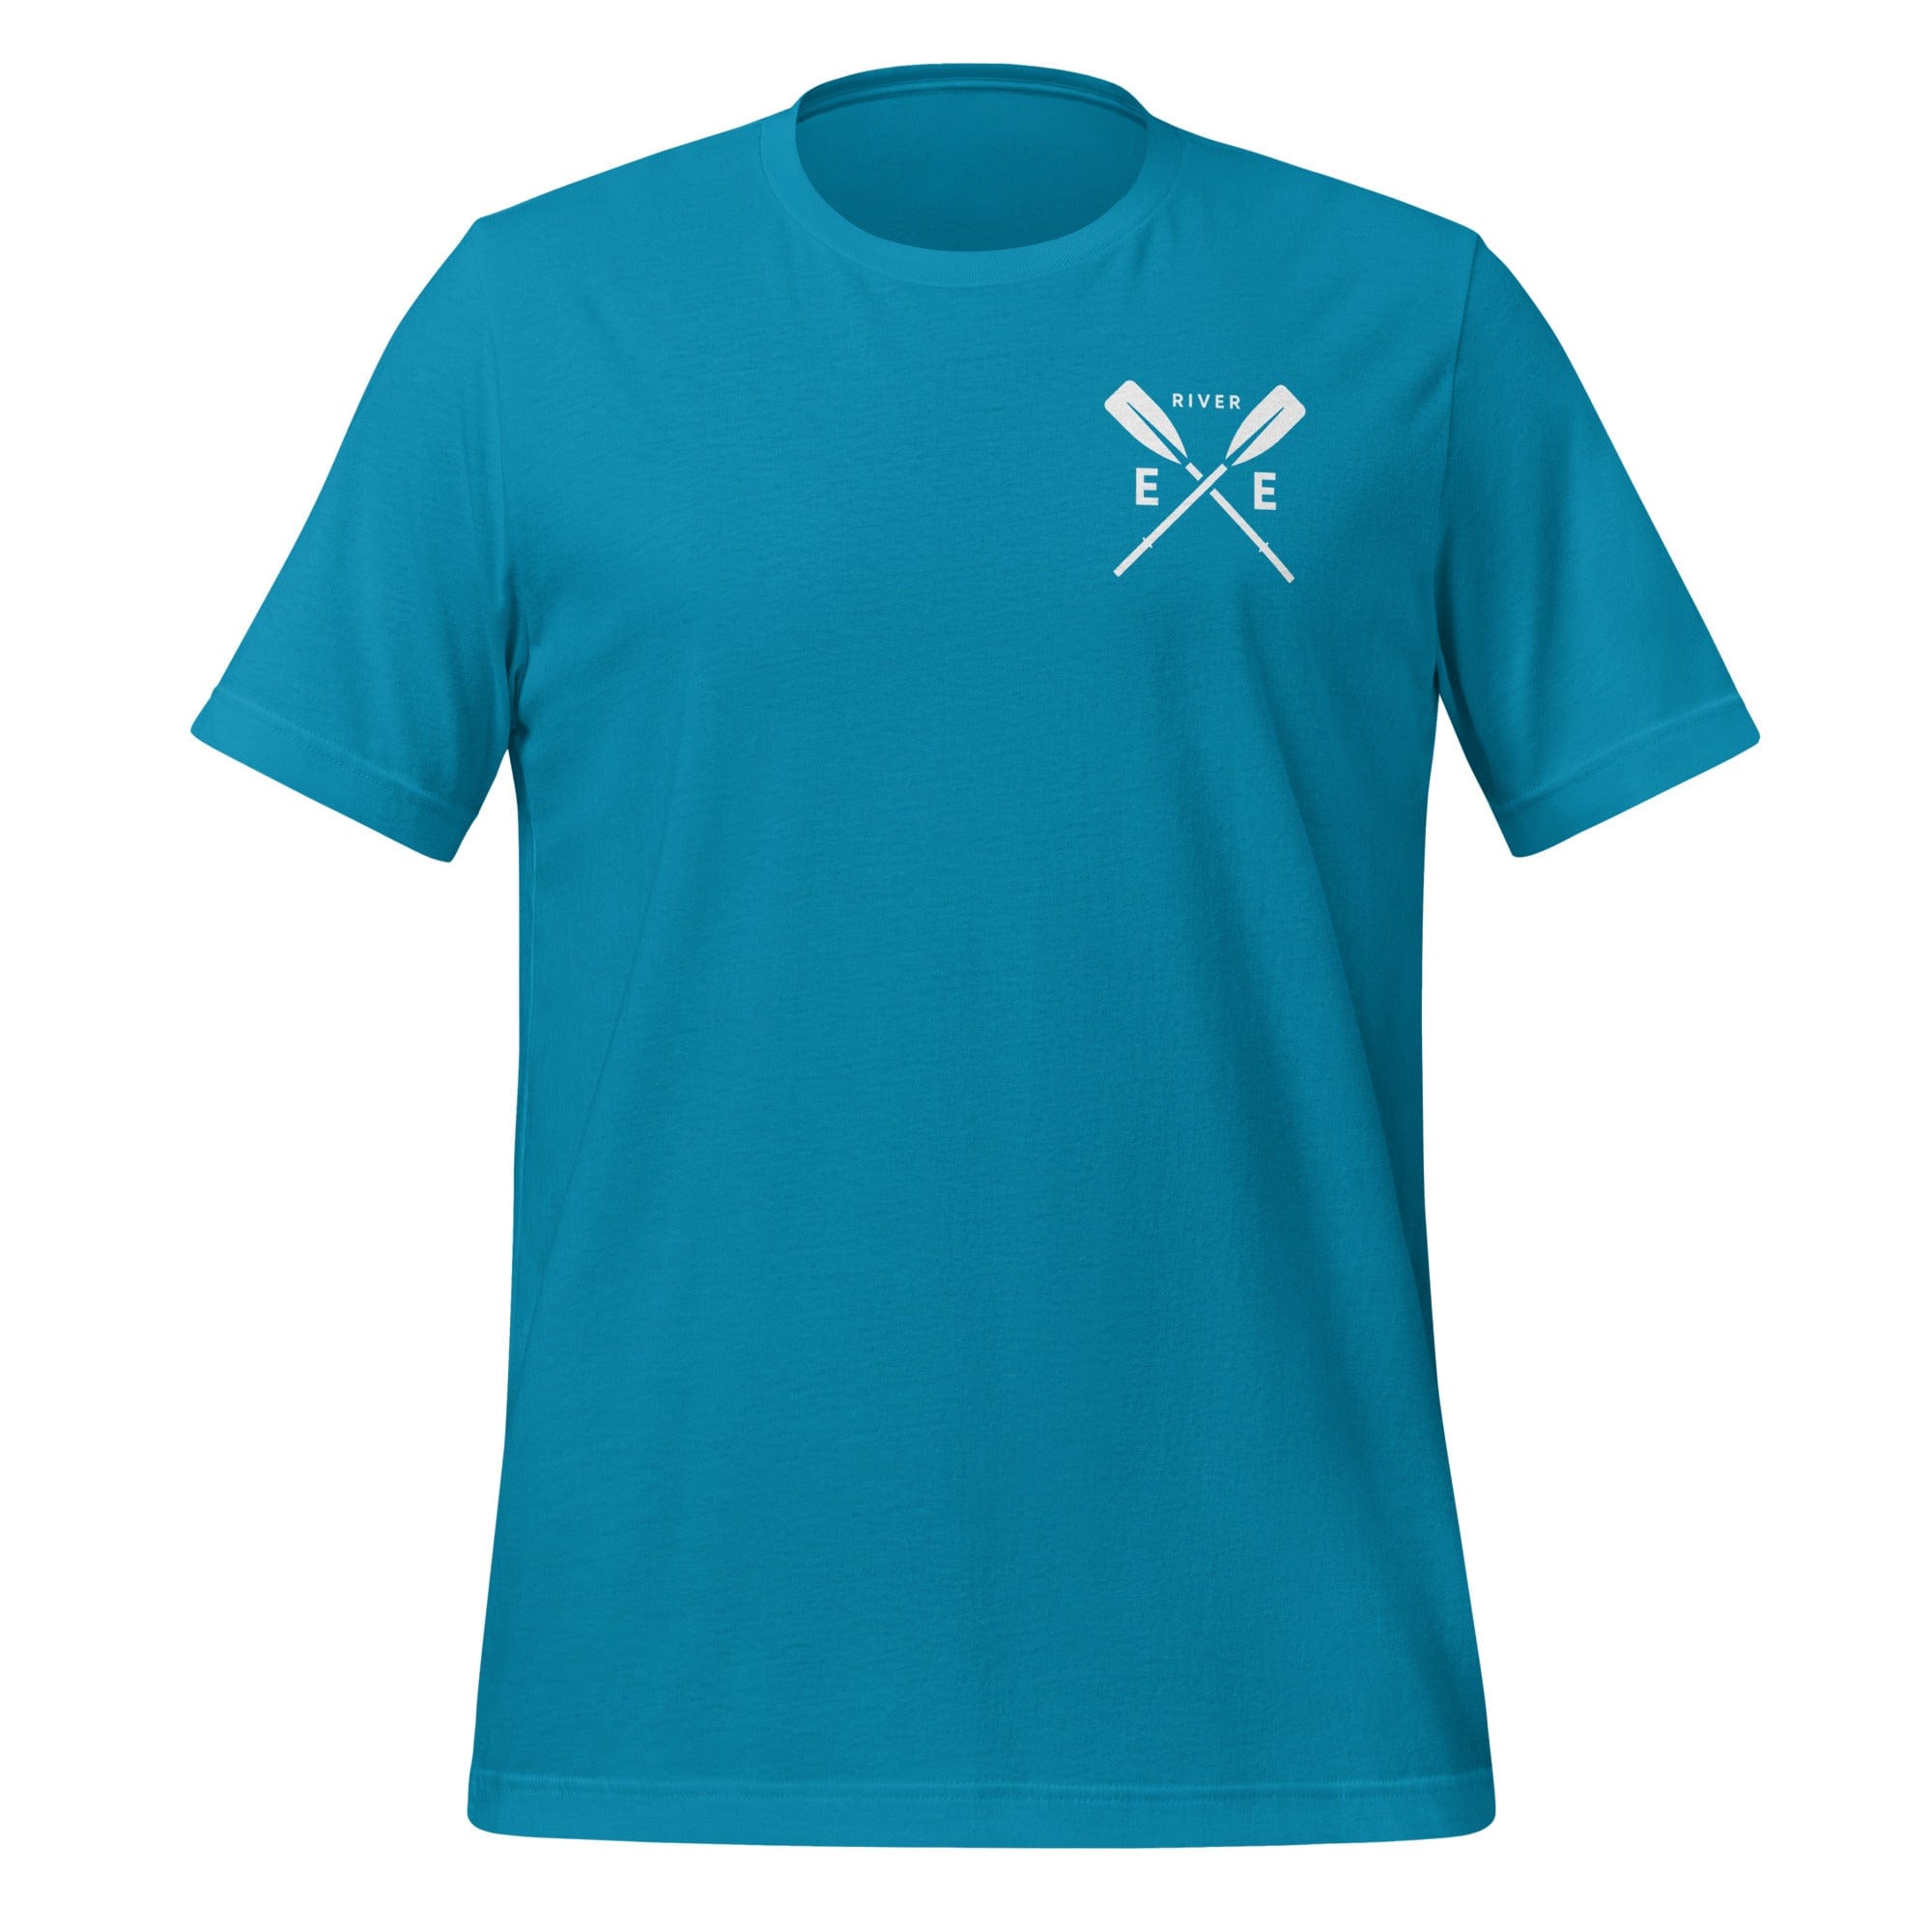 River Exe T-shirt | Exeter Gift Shop Shirts & Tops Jolly & Goode